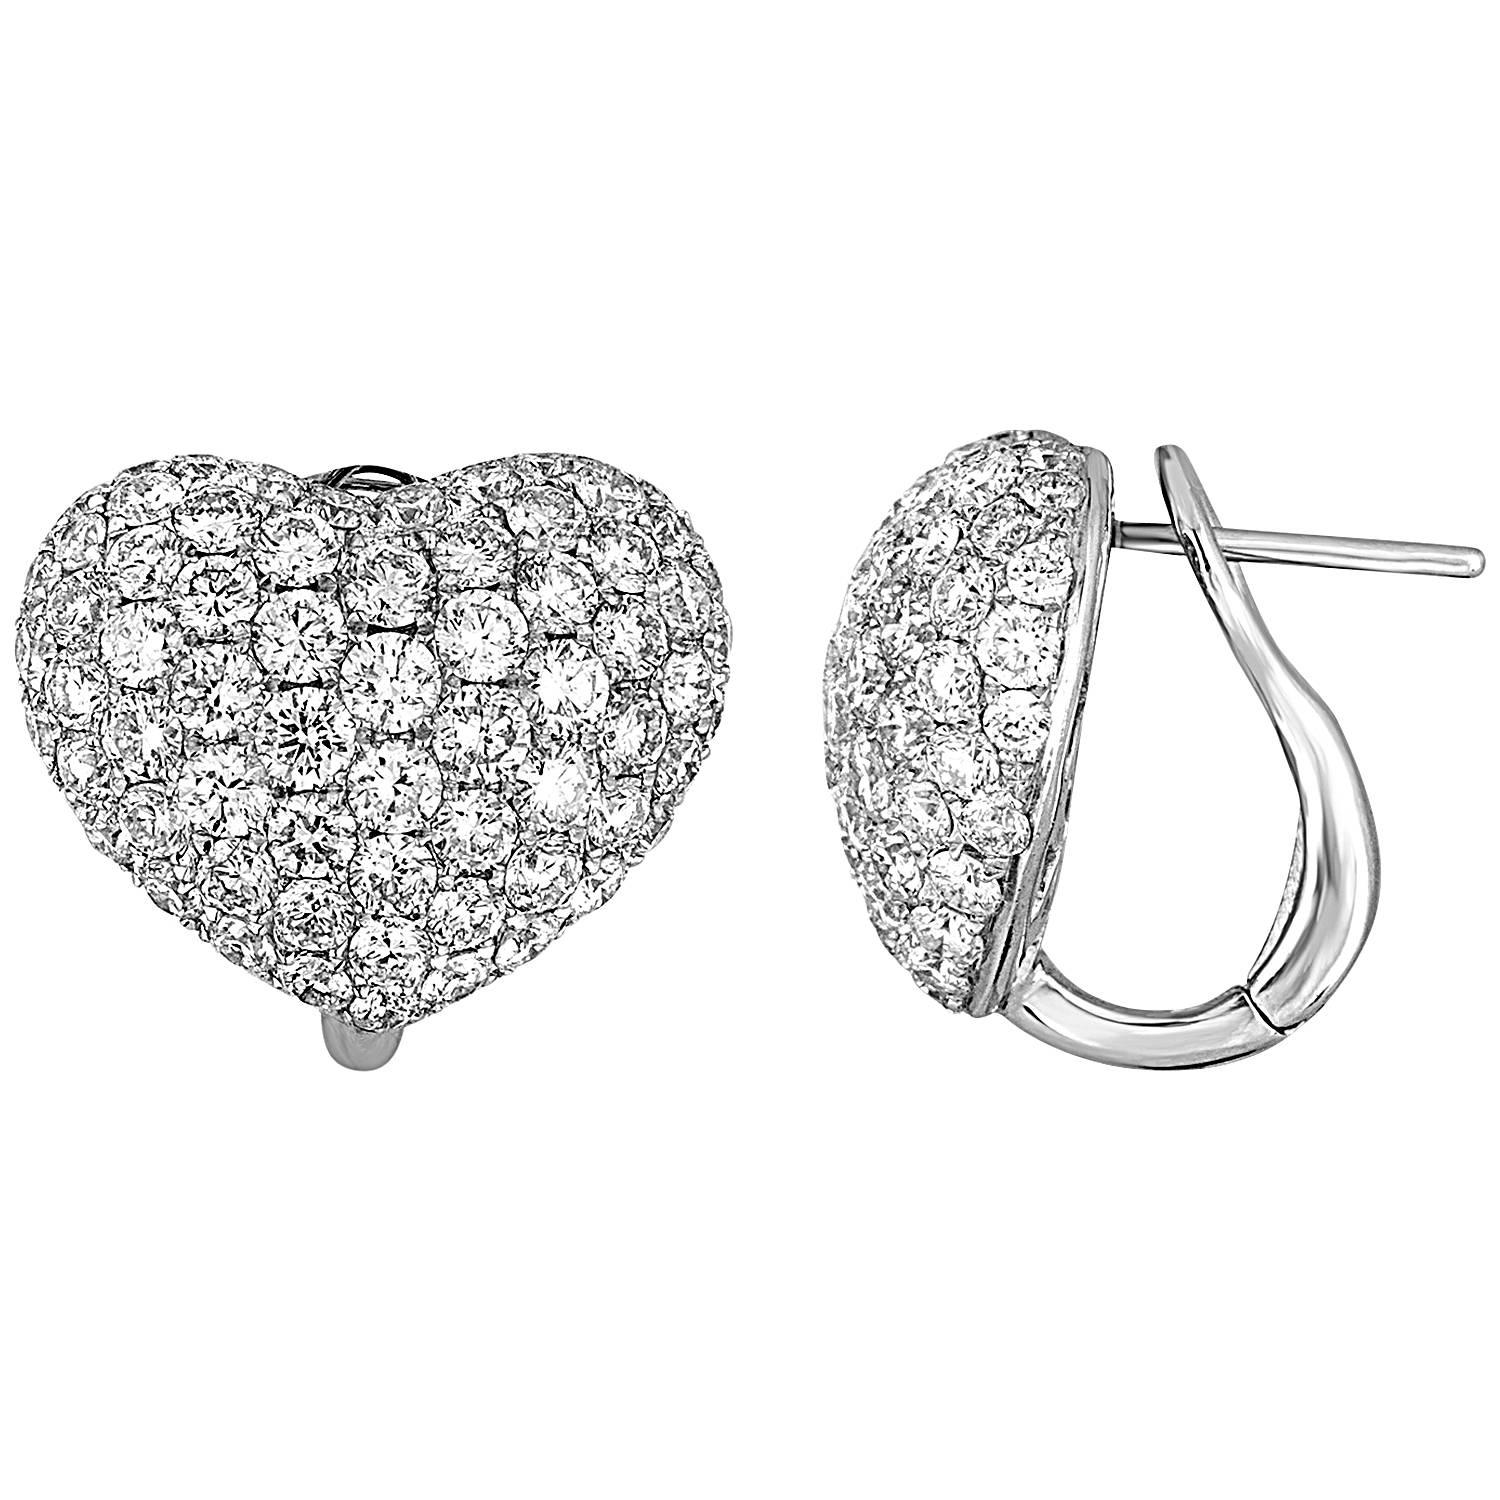 4.62 Carats Diamond Pave Gold Heart Earrings